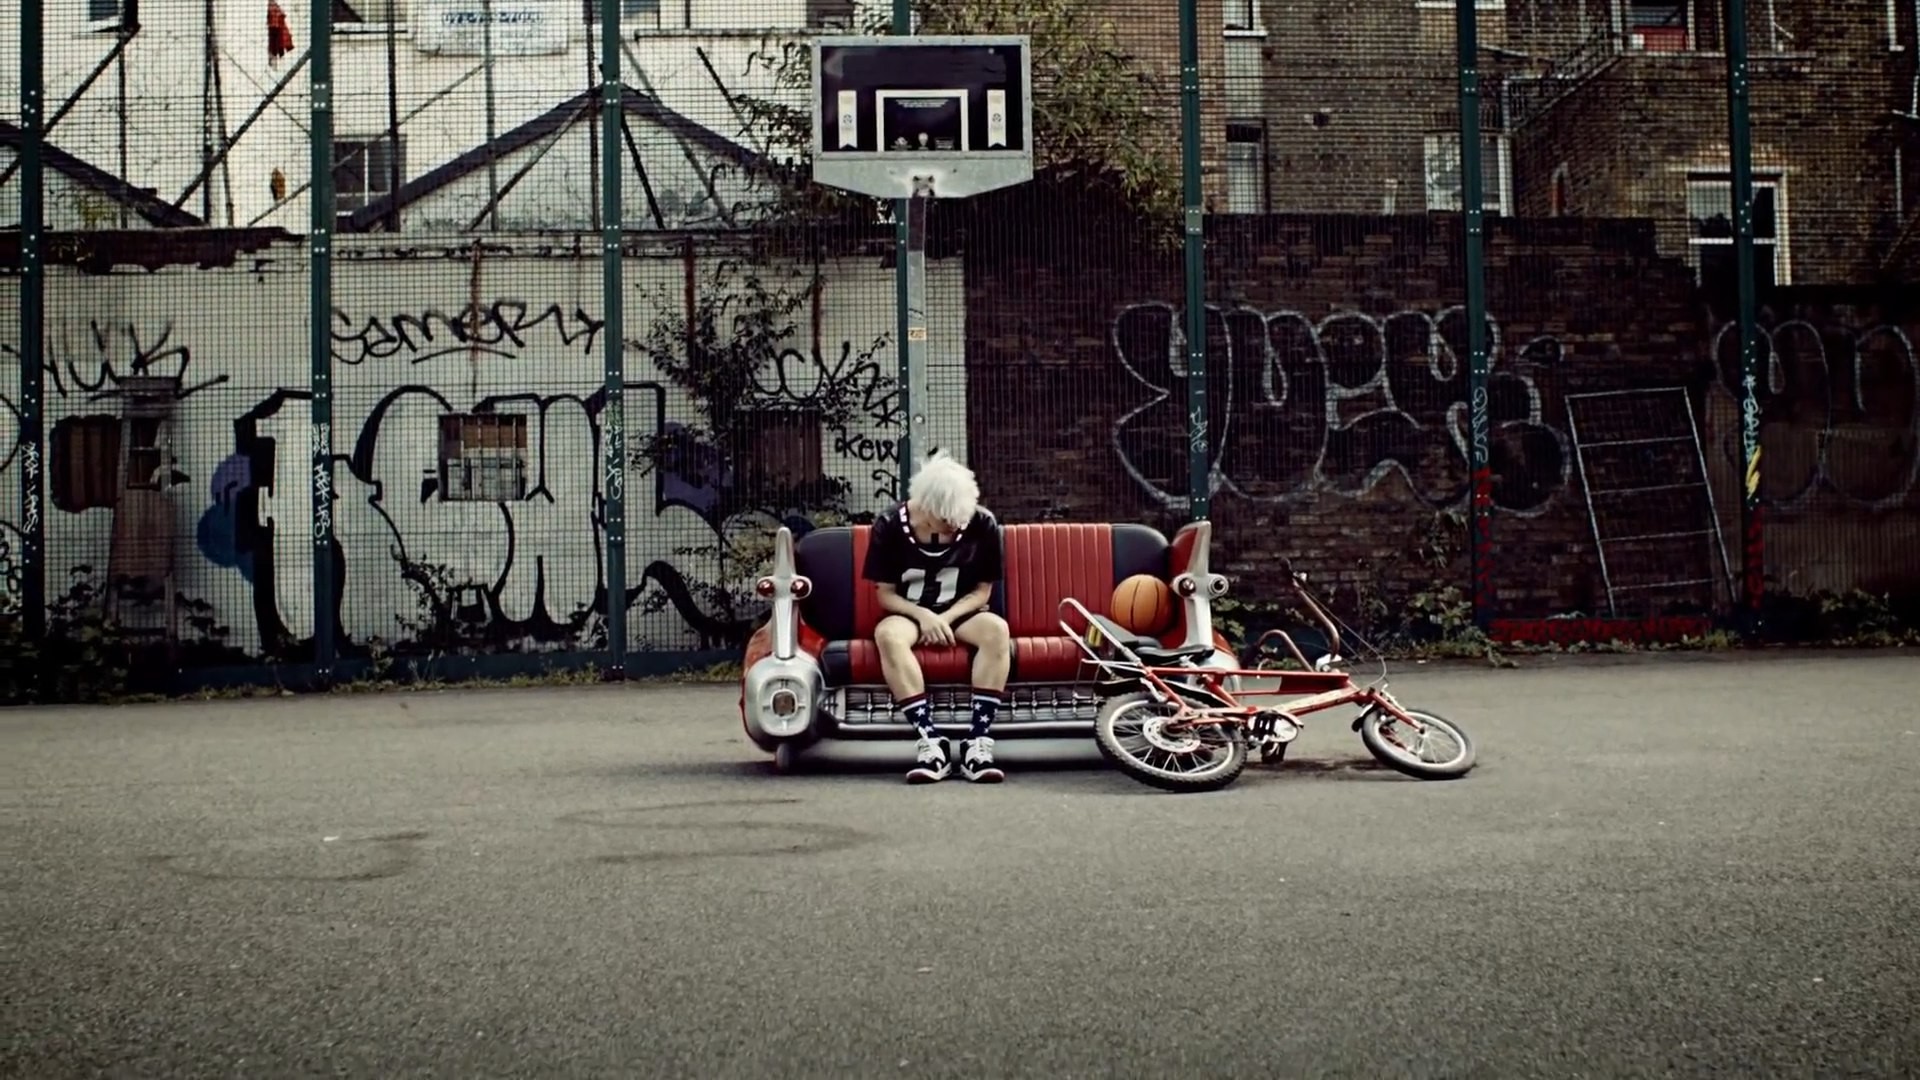 General 1920x1080 G-Dragon BIGBANG K-pop graffiti bicycle urban couch sitting